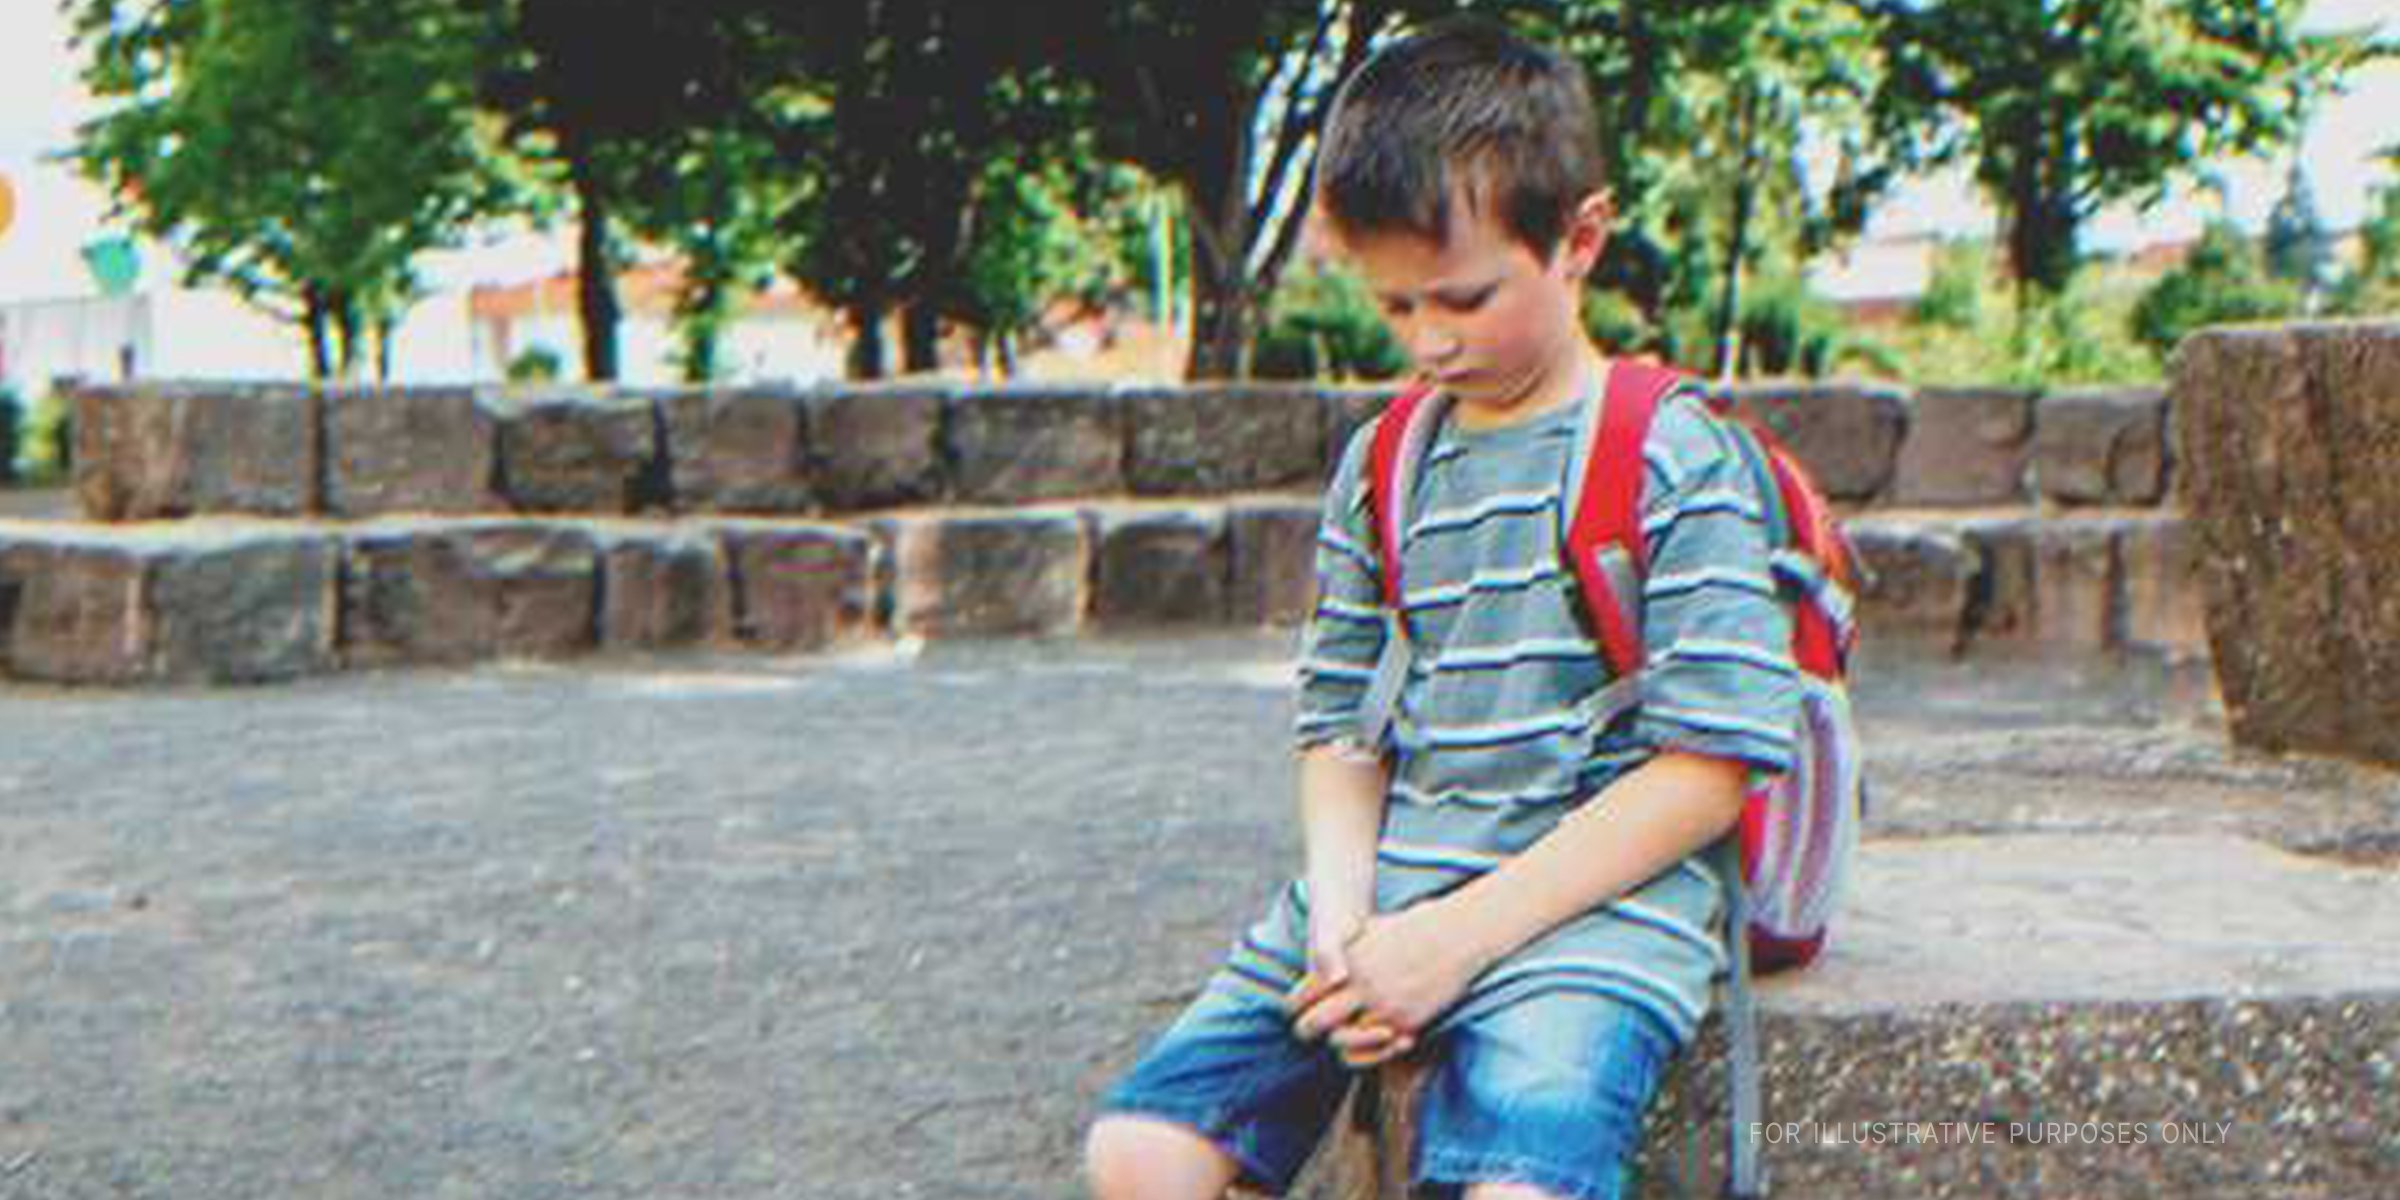 Sad boy in the school yard | Shuttertock.com